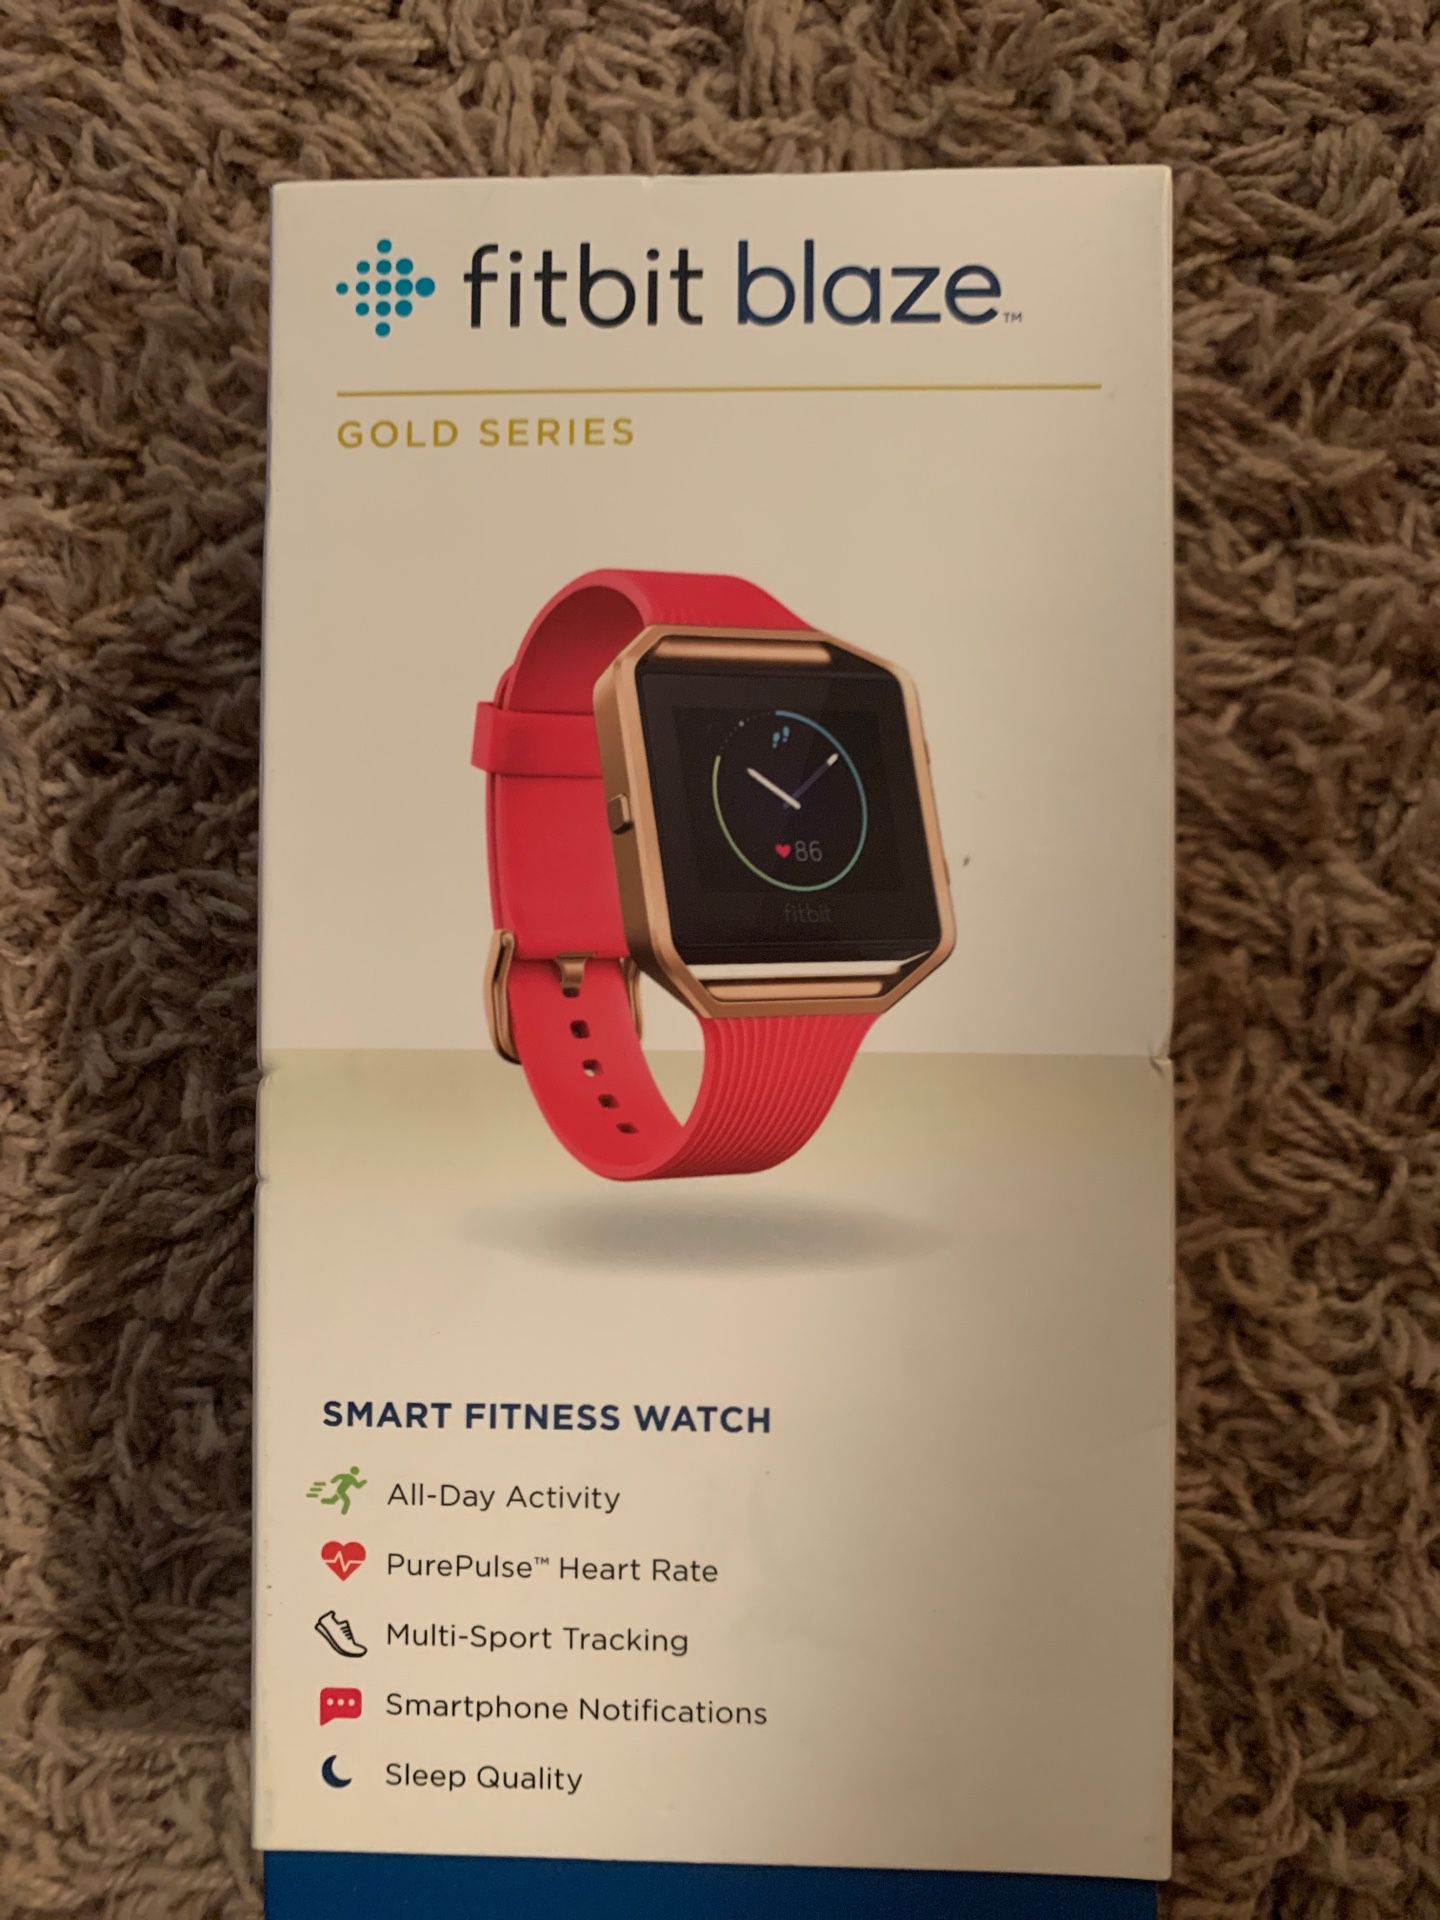 Fitbit Blaze (gold series)